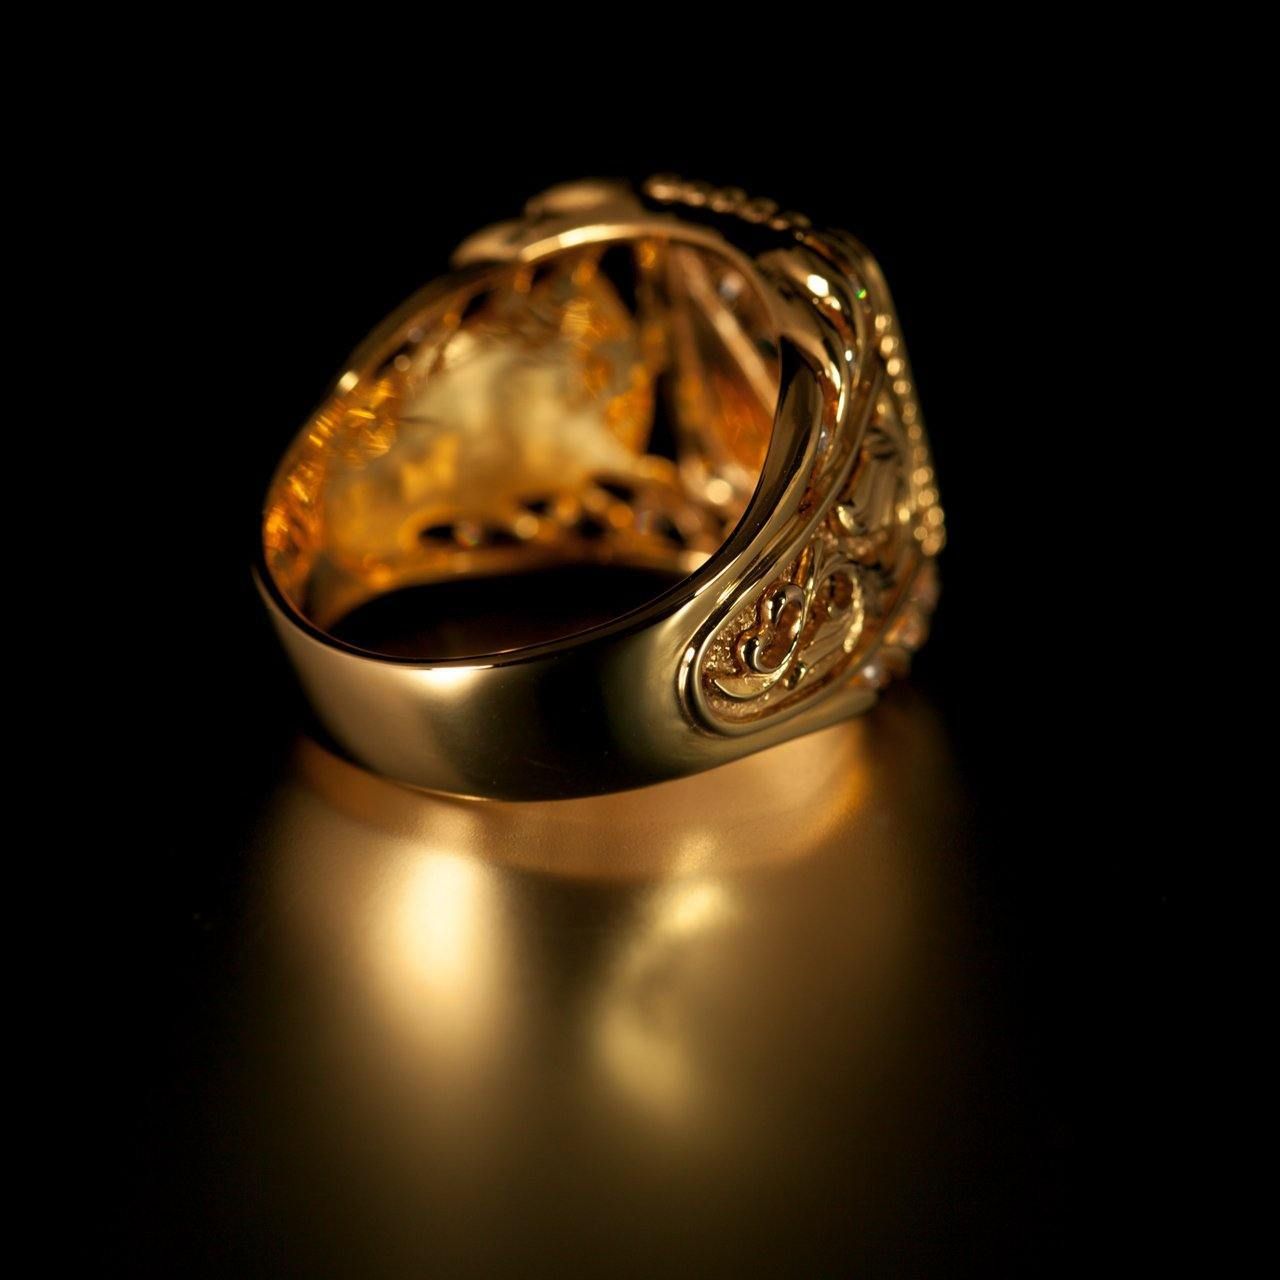 22K Gold 'Yellow Sapphire' Ring for Men - 235-GR6411 in 5.450 Grams